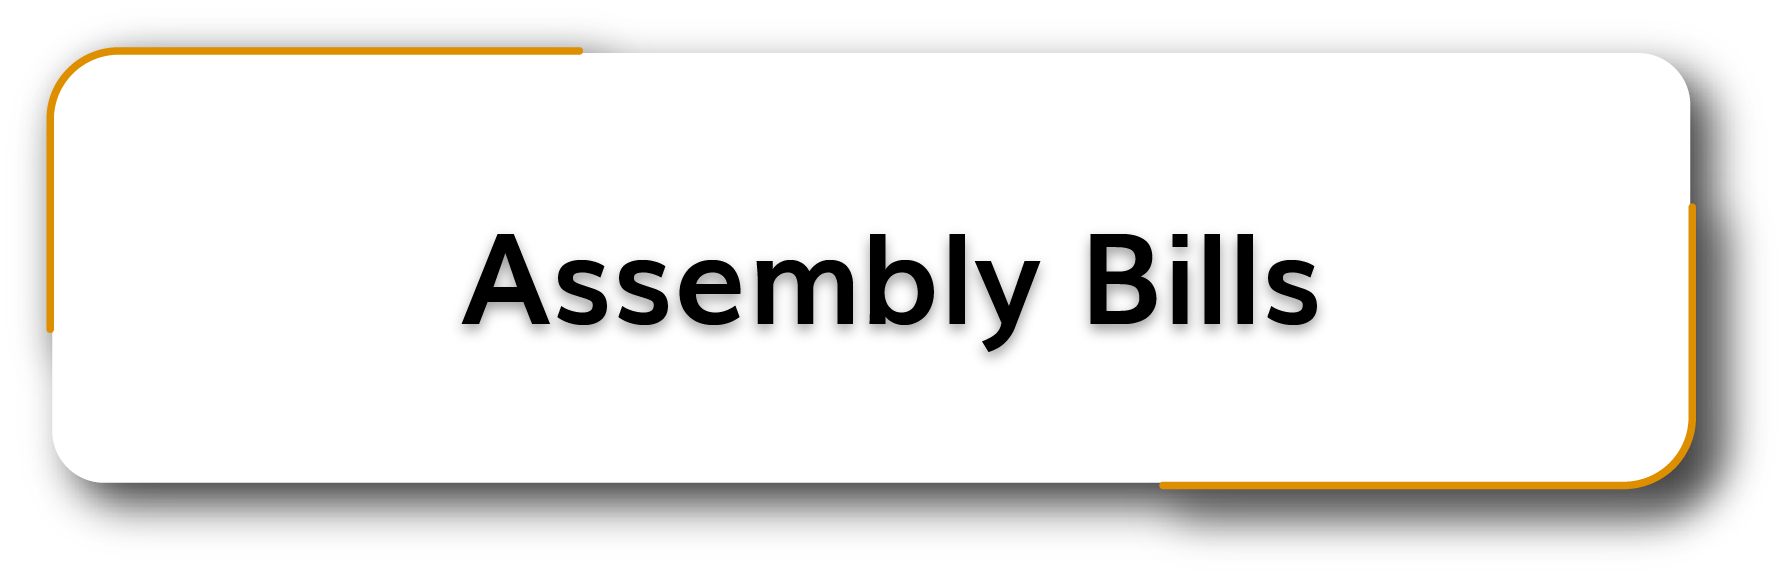 Assembly Bills Title